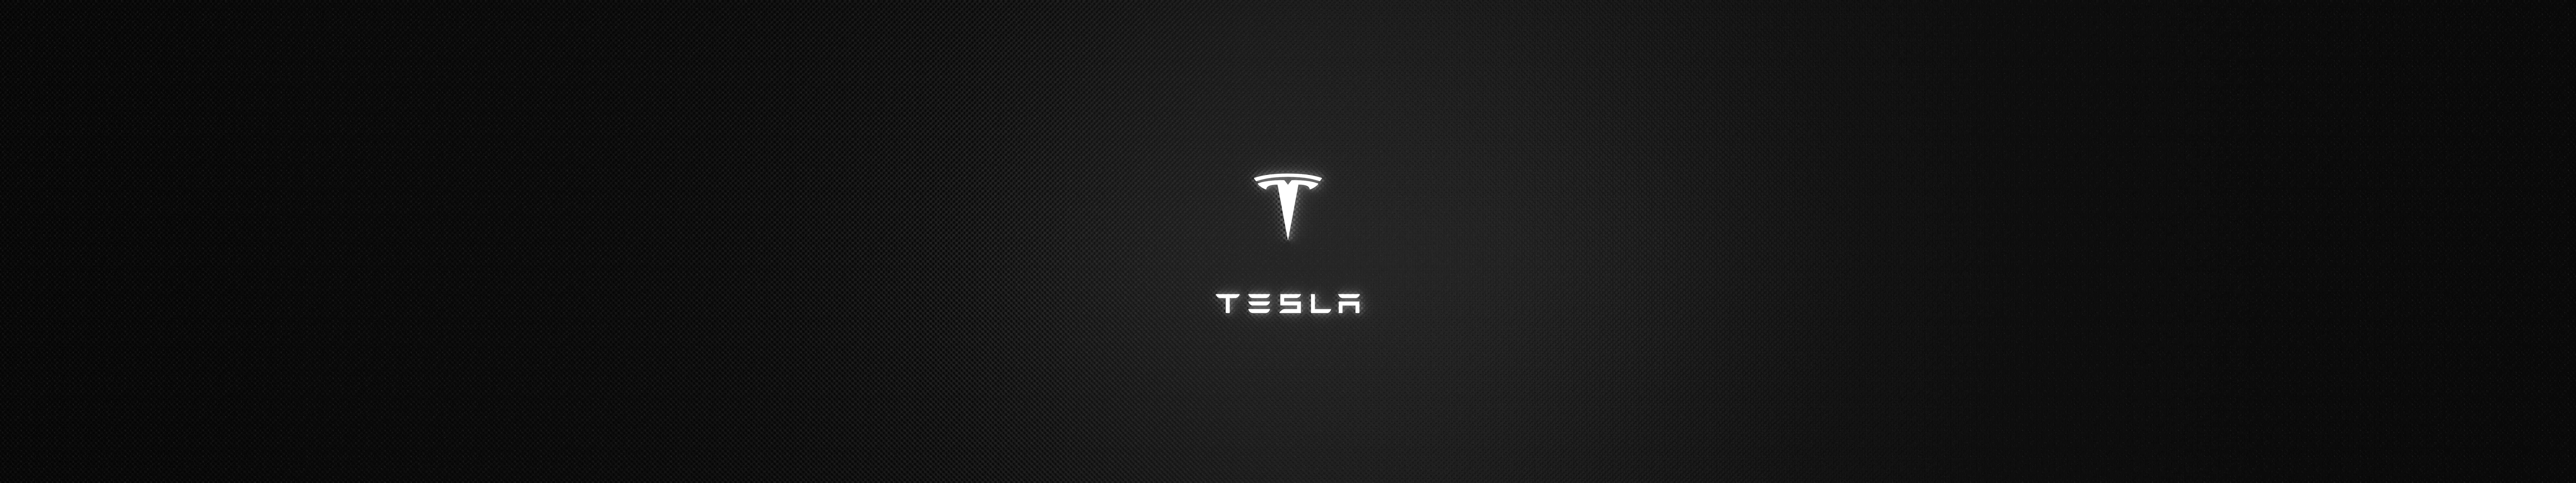 Teslalogo Dunkel Dreifachmonitor Wallpaper